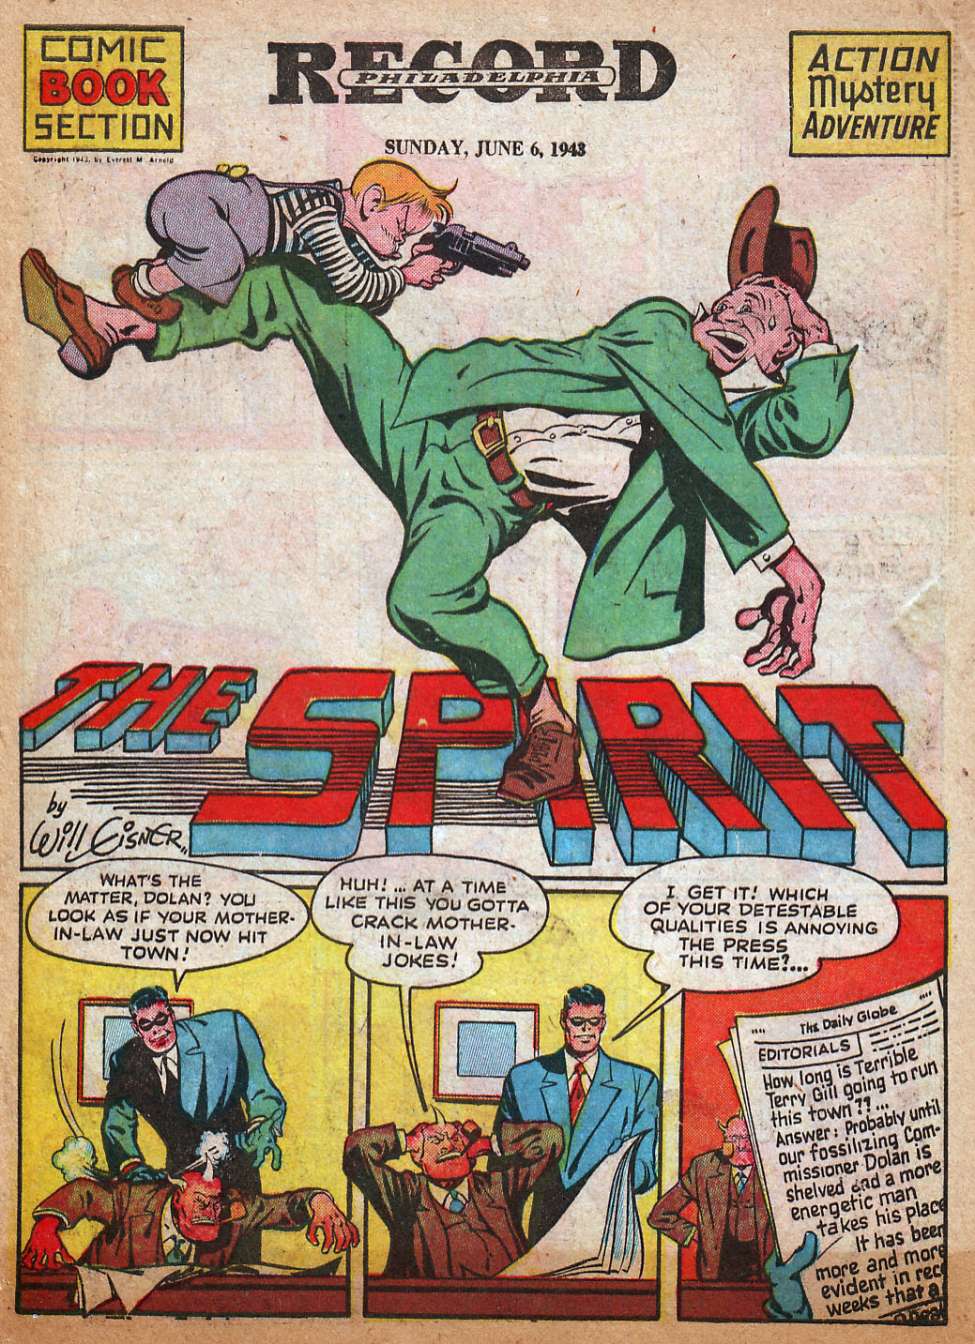 Comic Book Cover For The Spirit (1943-06-06) - Philadelphia Record